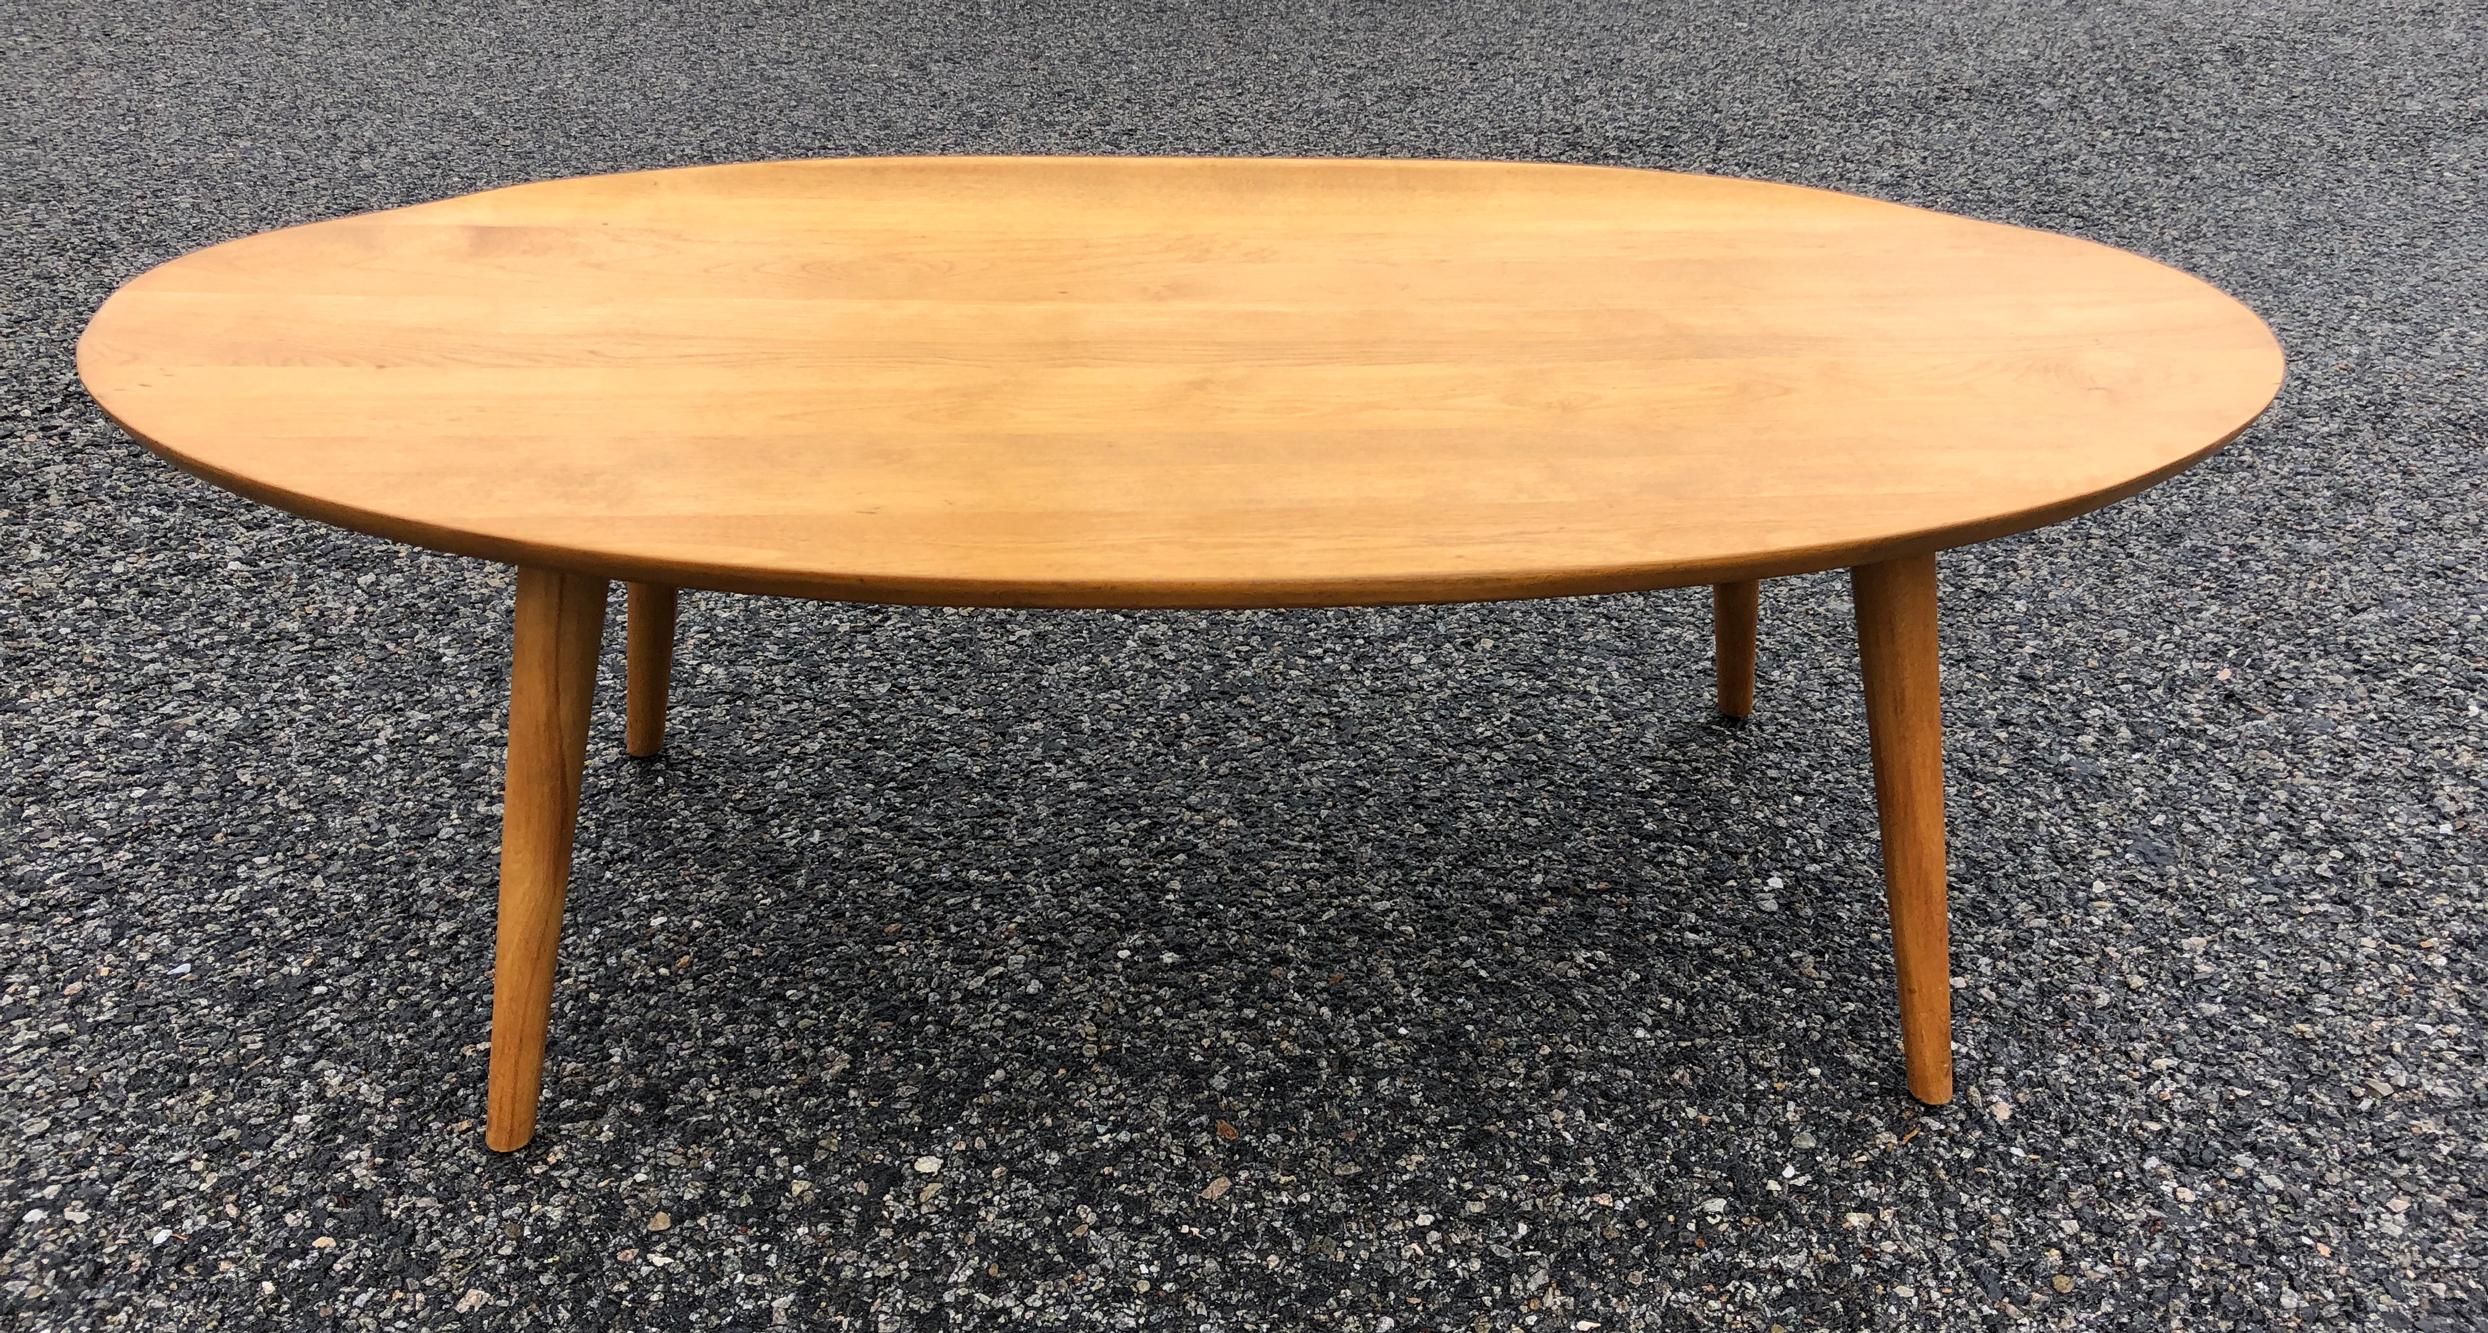 Wood Surf Table, Midcentury Russel Wright Elliptical Coffee Table with Raised Edge